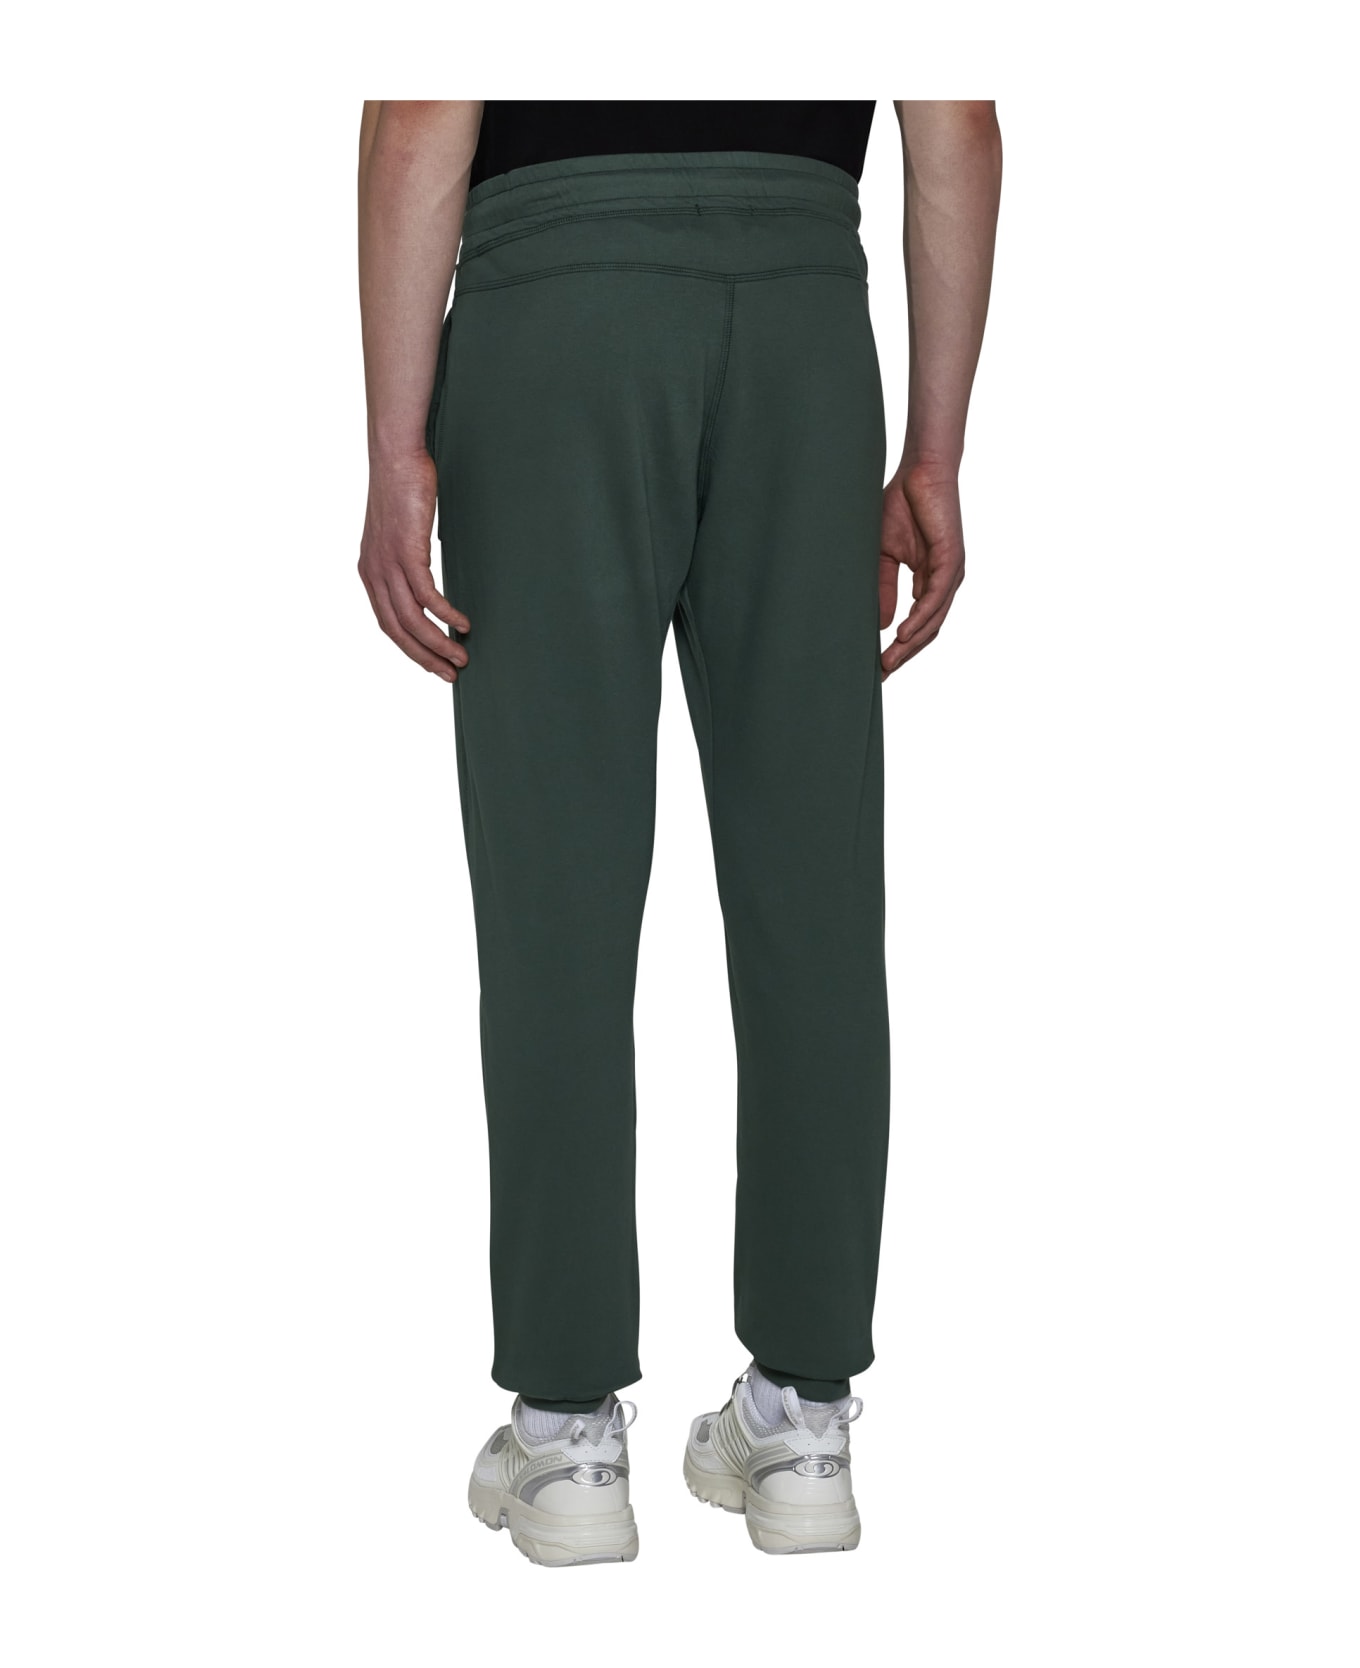 C.P. Company Pants - Duck green ボトムス